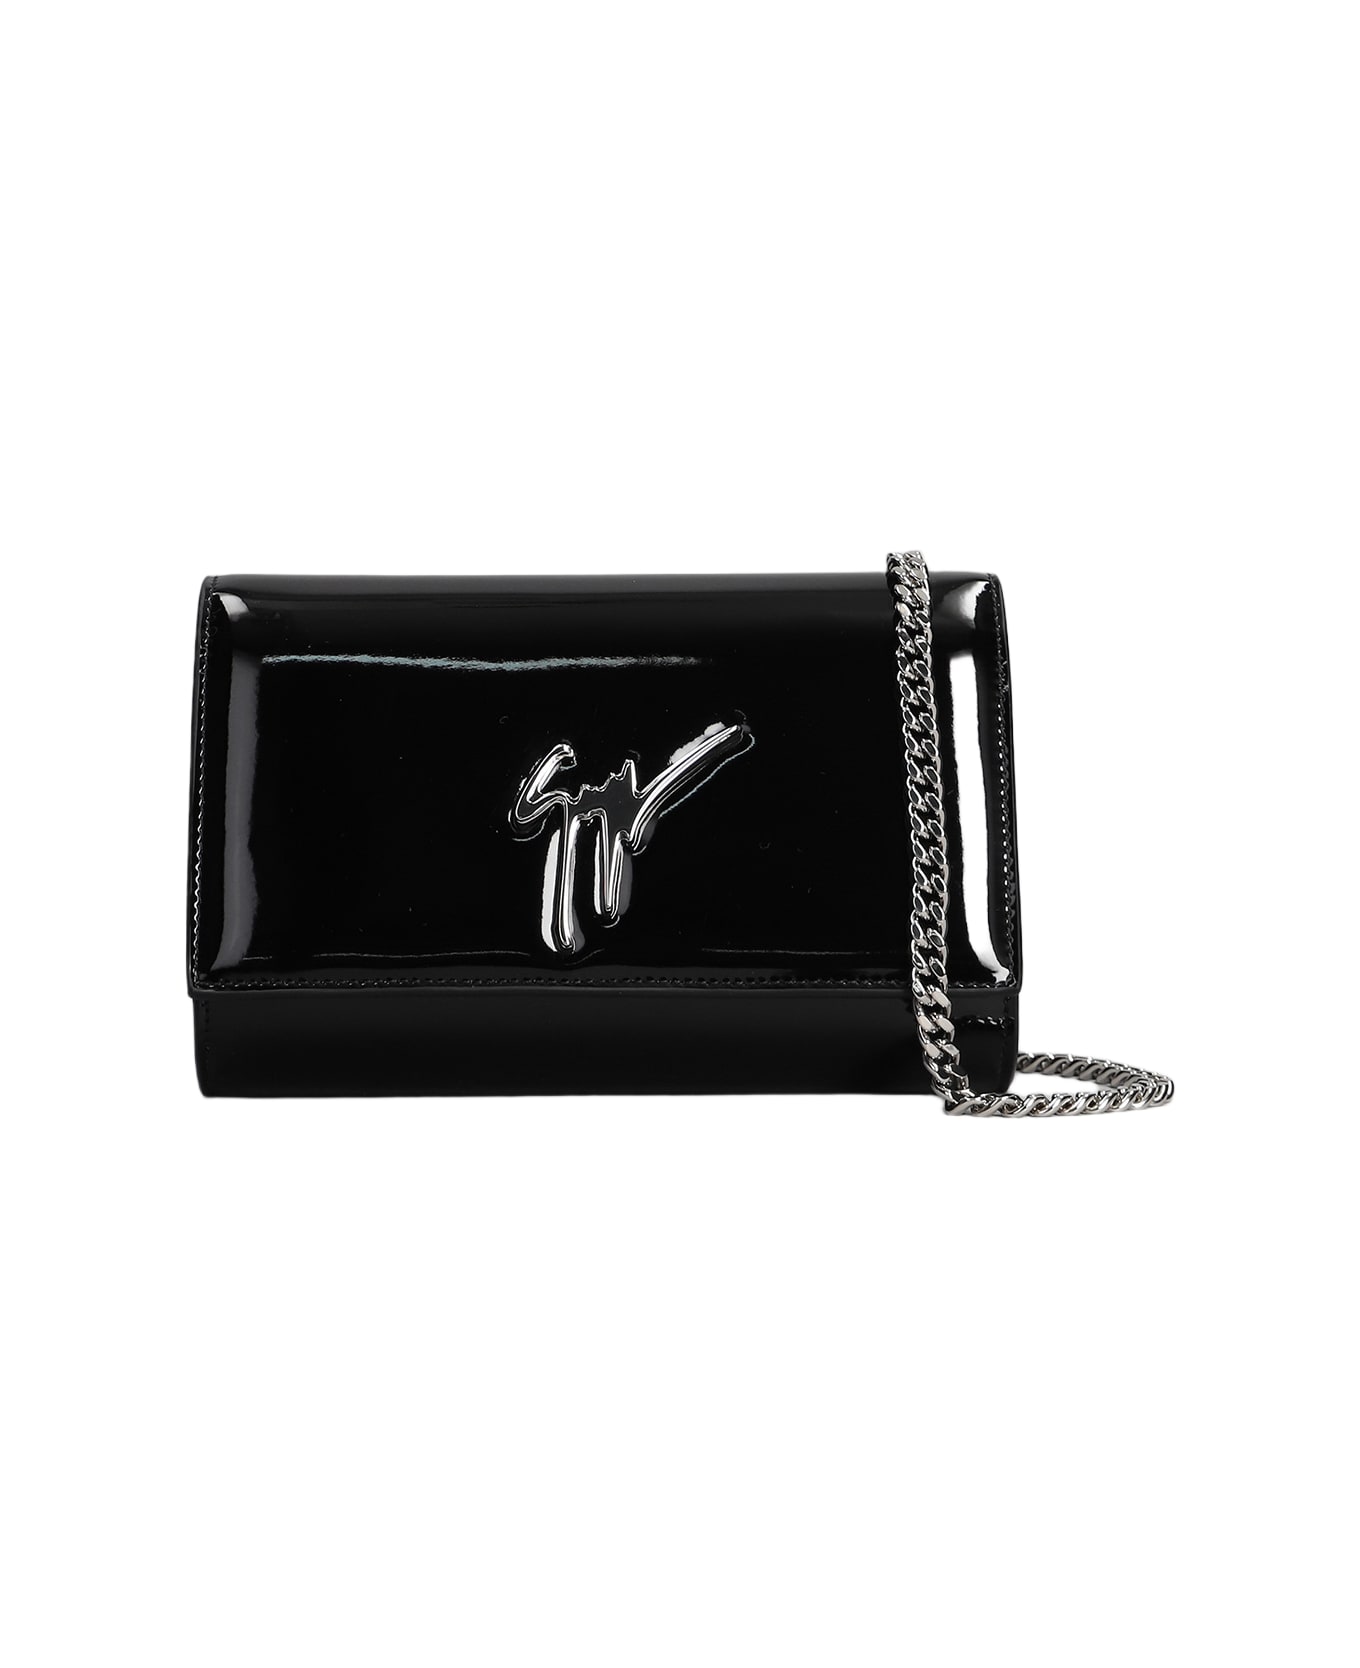 Giuseppe Zanotti Cleopatra Clutch In Black Patent Leather - Black Silver